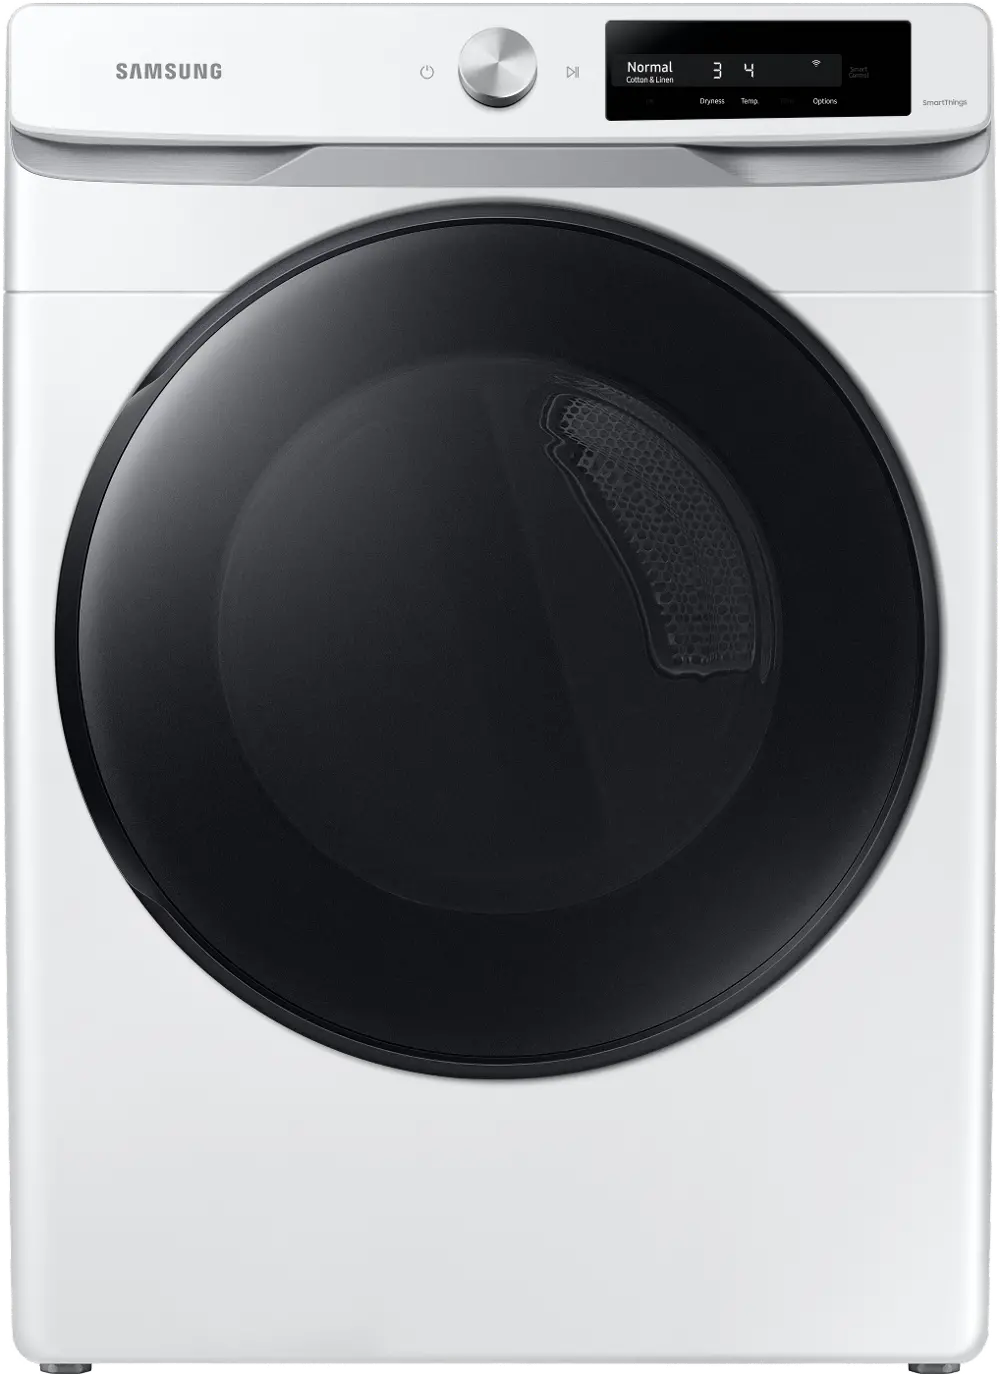 DVE45A6400W Samsung Electric Dryer - White, 45A6400-1